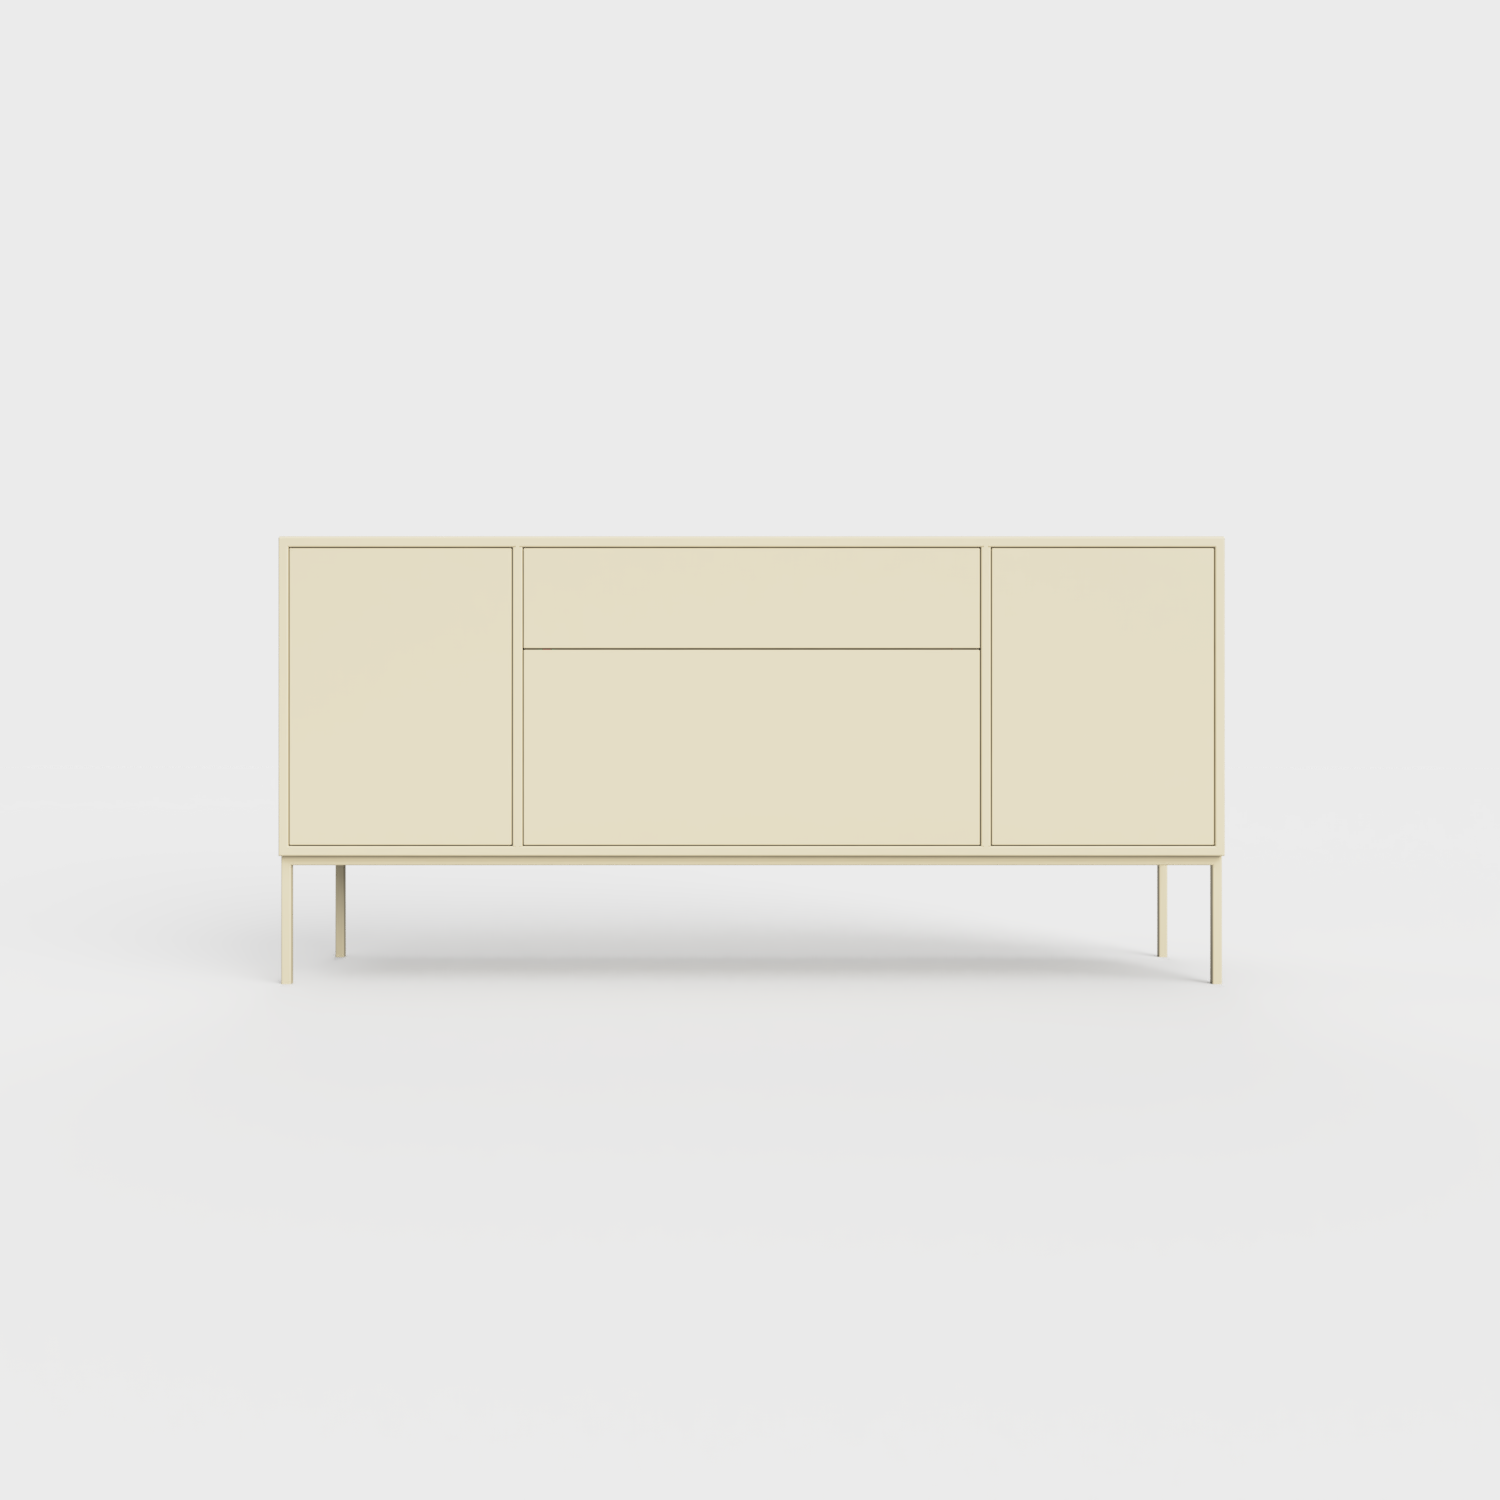 Arnika 02 Sideboard in Dark Ecru color, powder-coated steel, elegant and modern piece of furniture for your living room